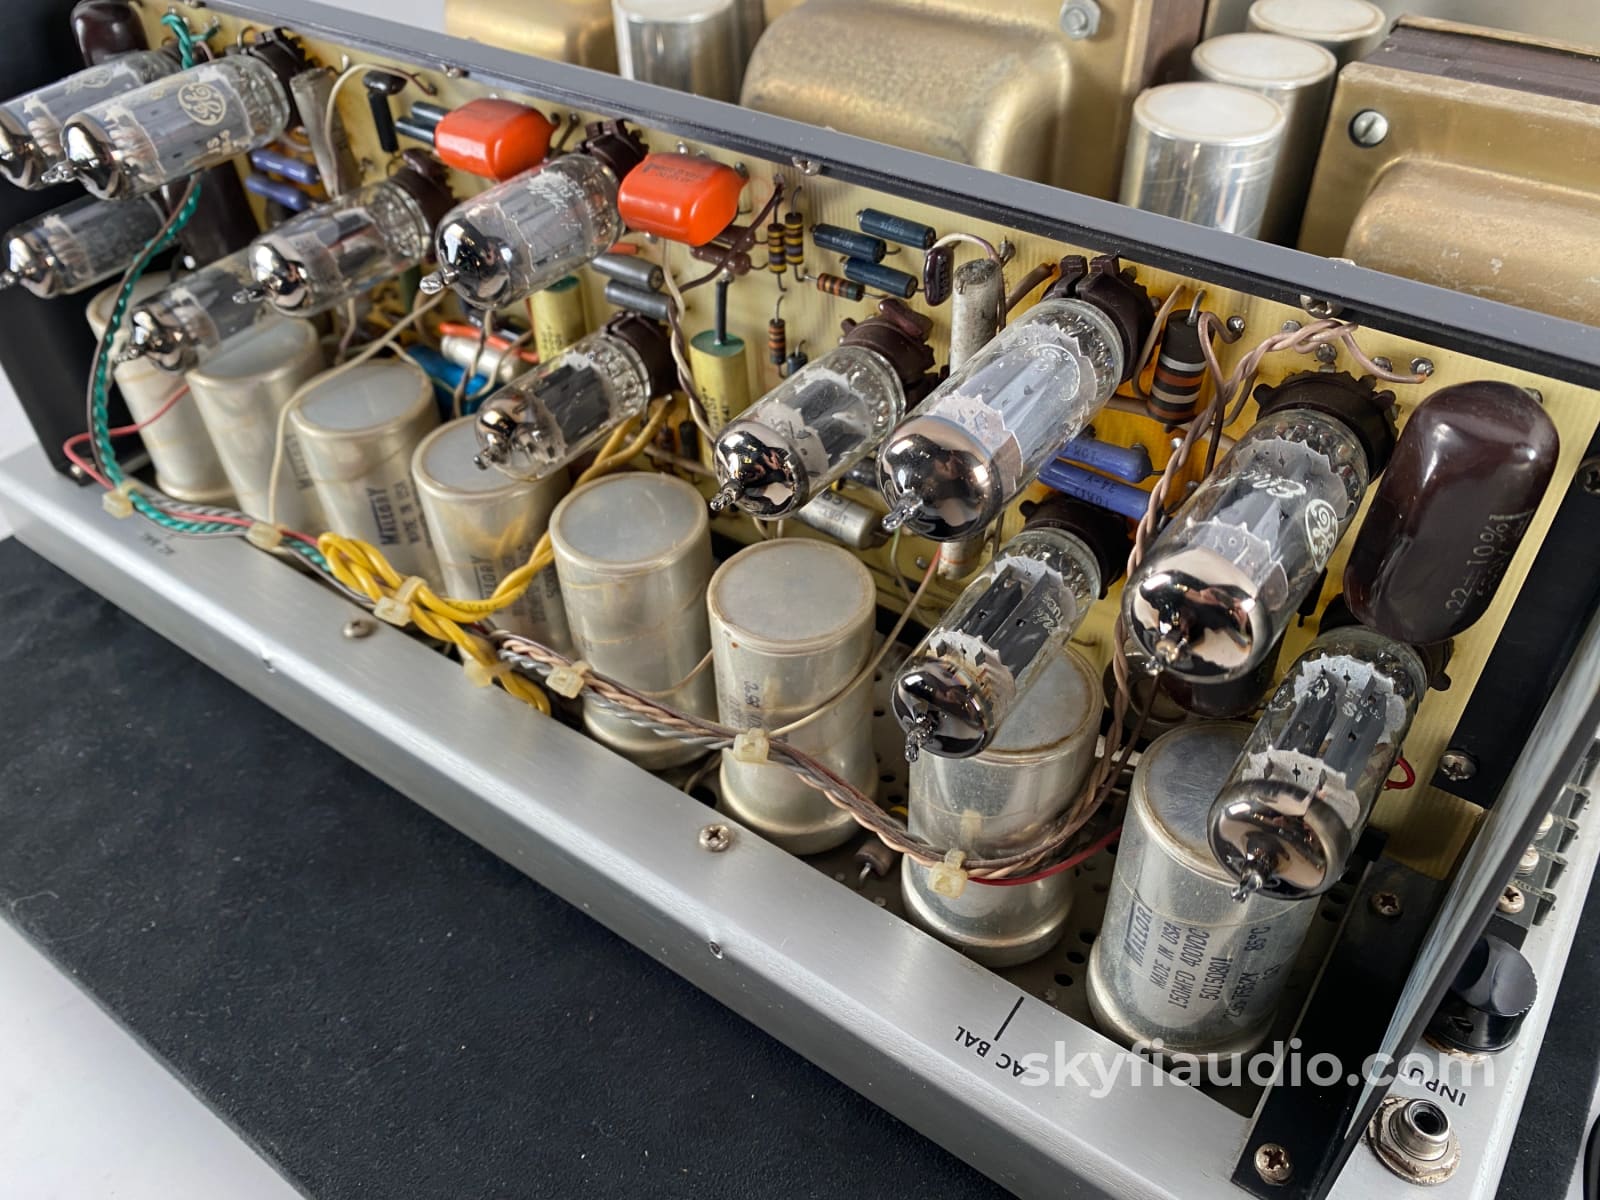 Audio Research D-76A Vintage All-Tube Amplifier Survivor Condition